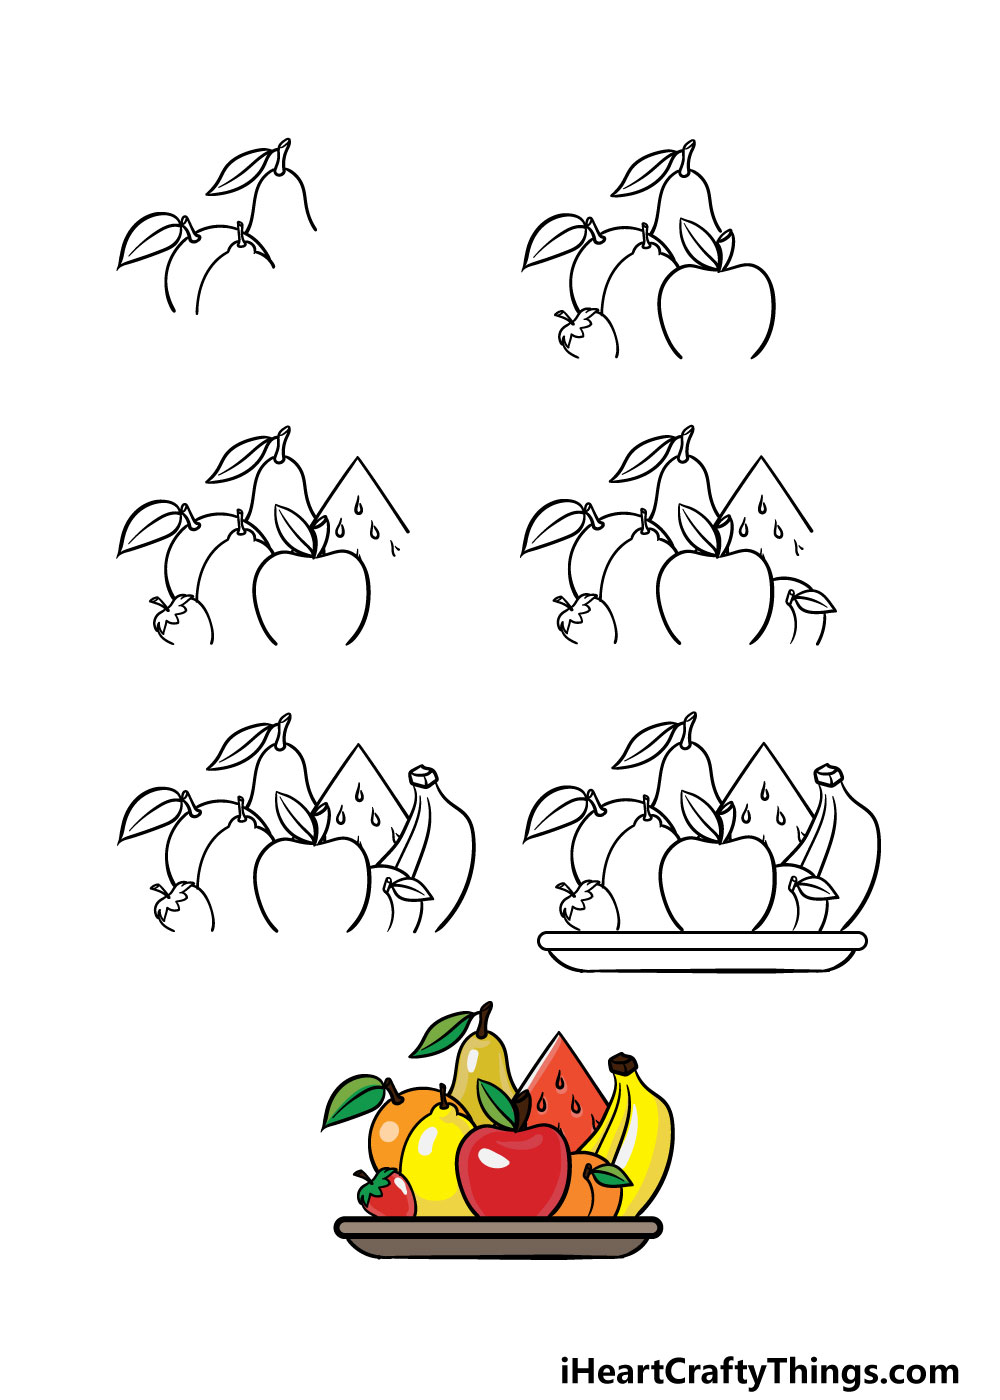 cách vẽ trái khoáy cây nhập 7 bước